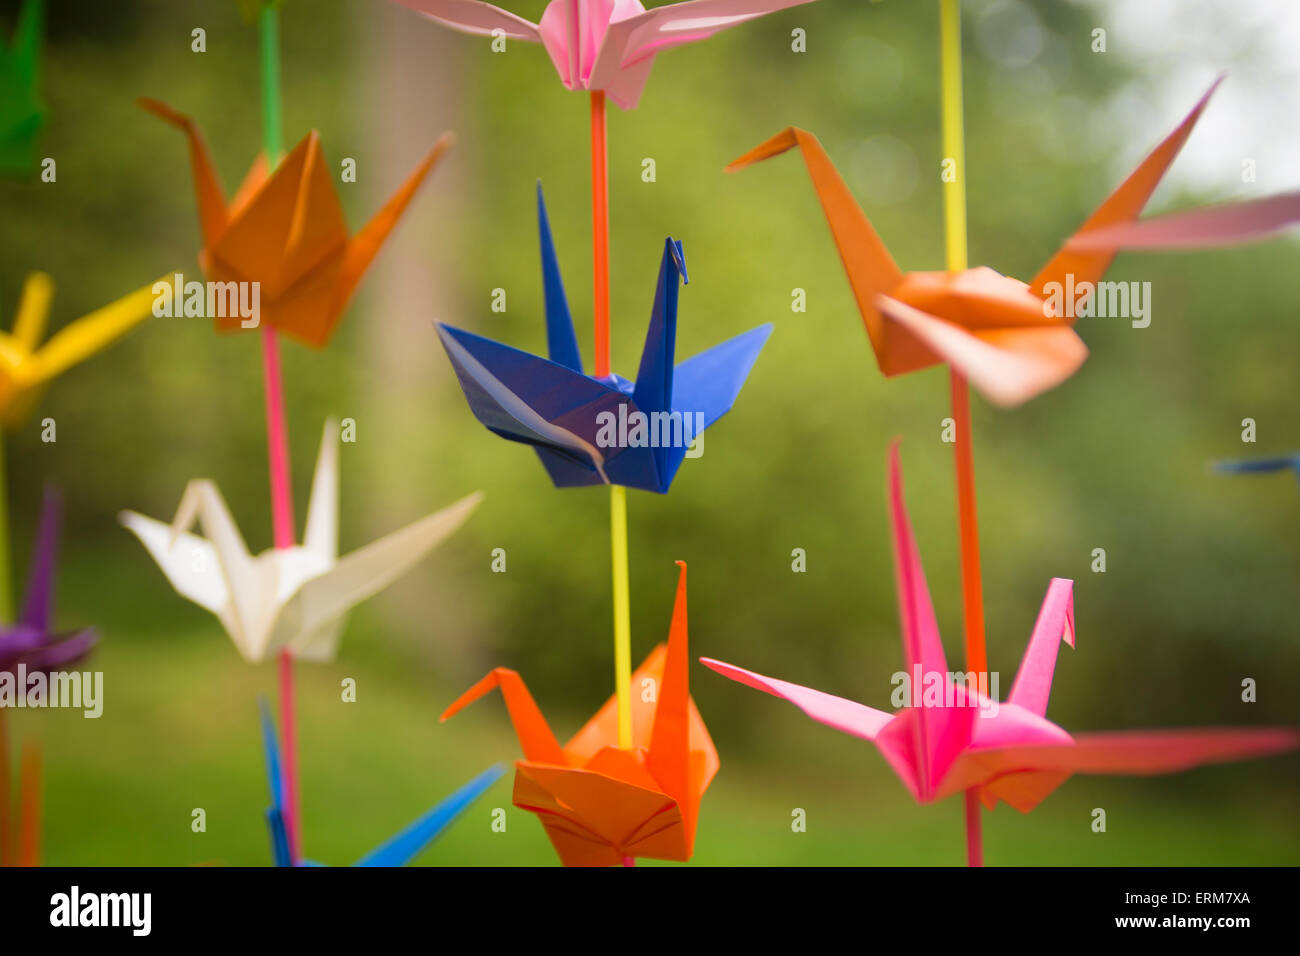 Vibrant Origami Cranes Stock Photo